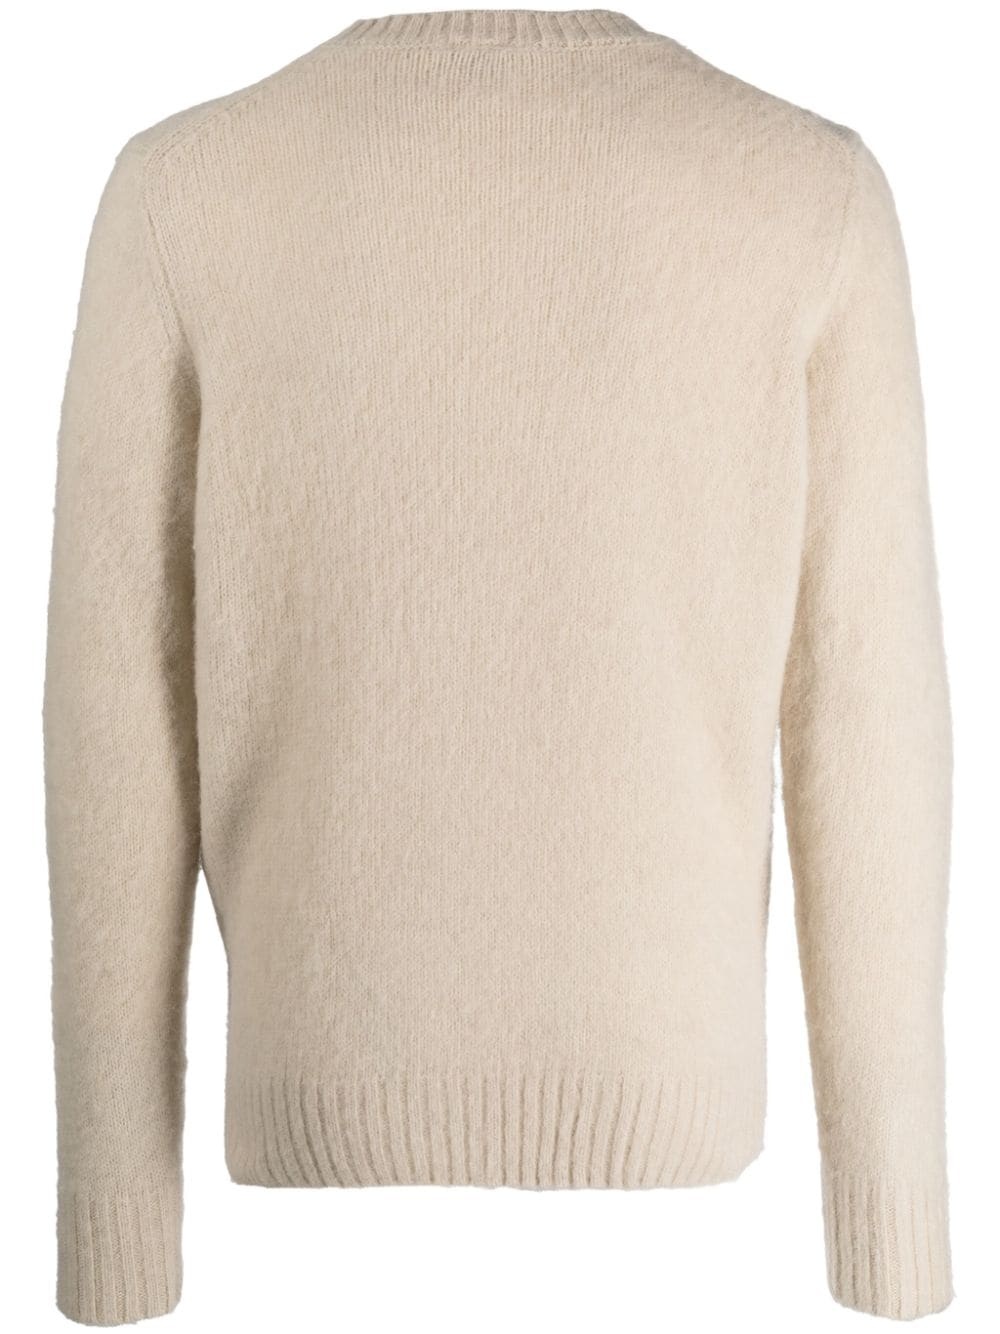 brushed-finish wool jumper